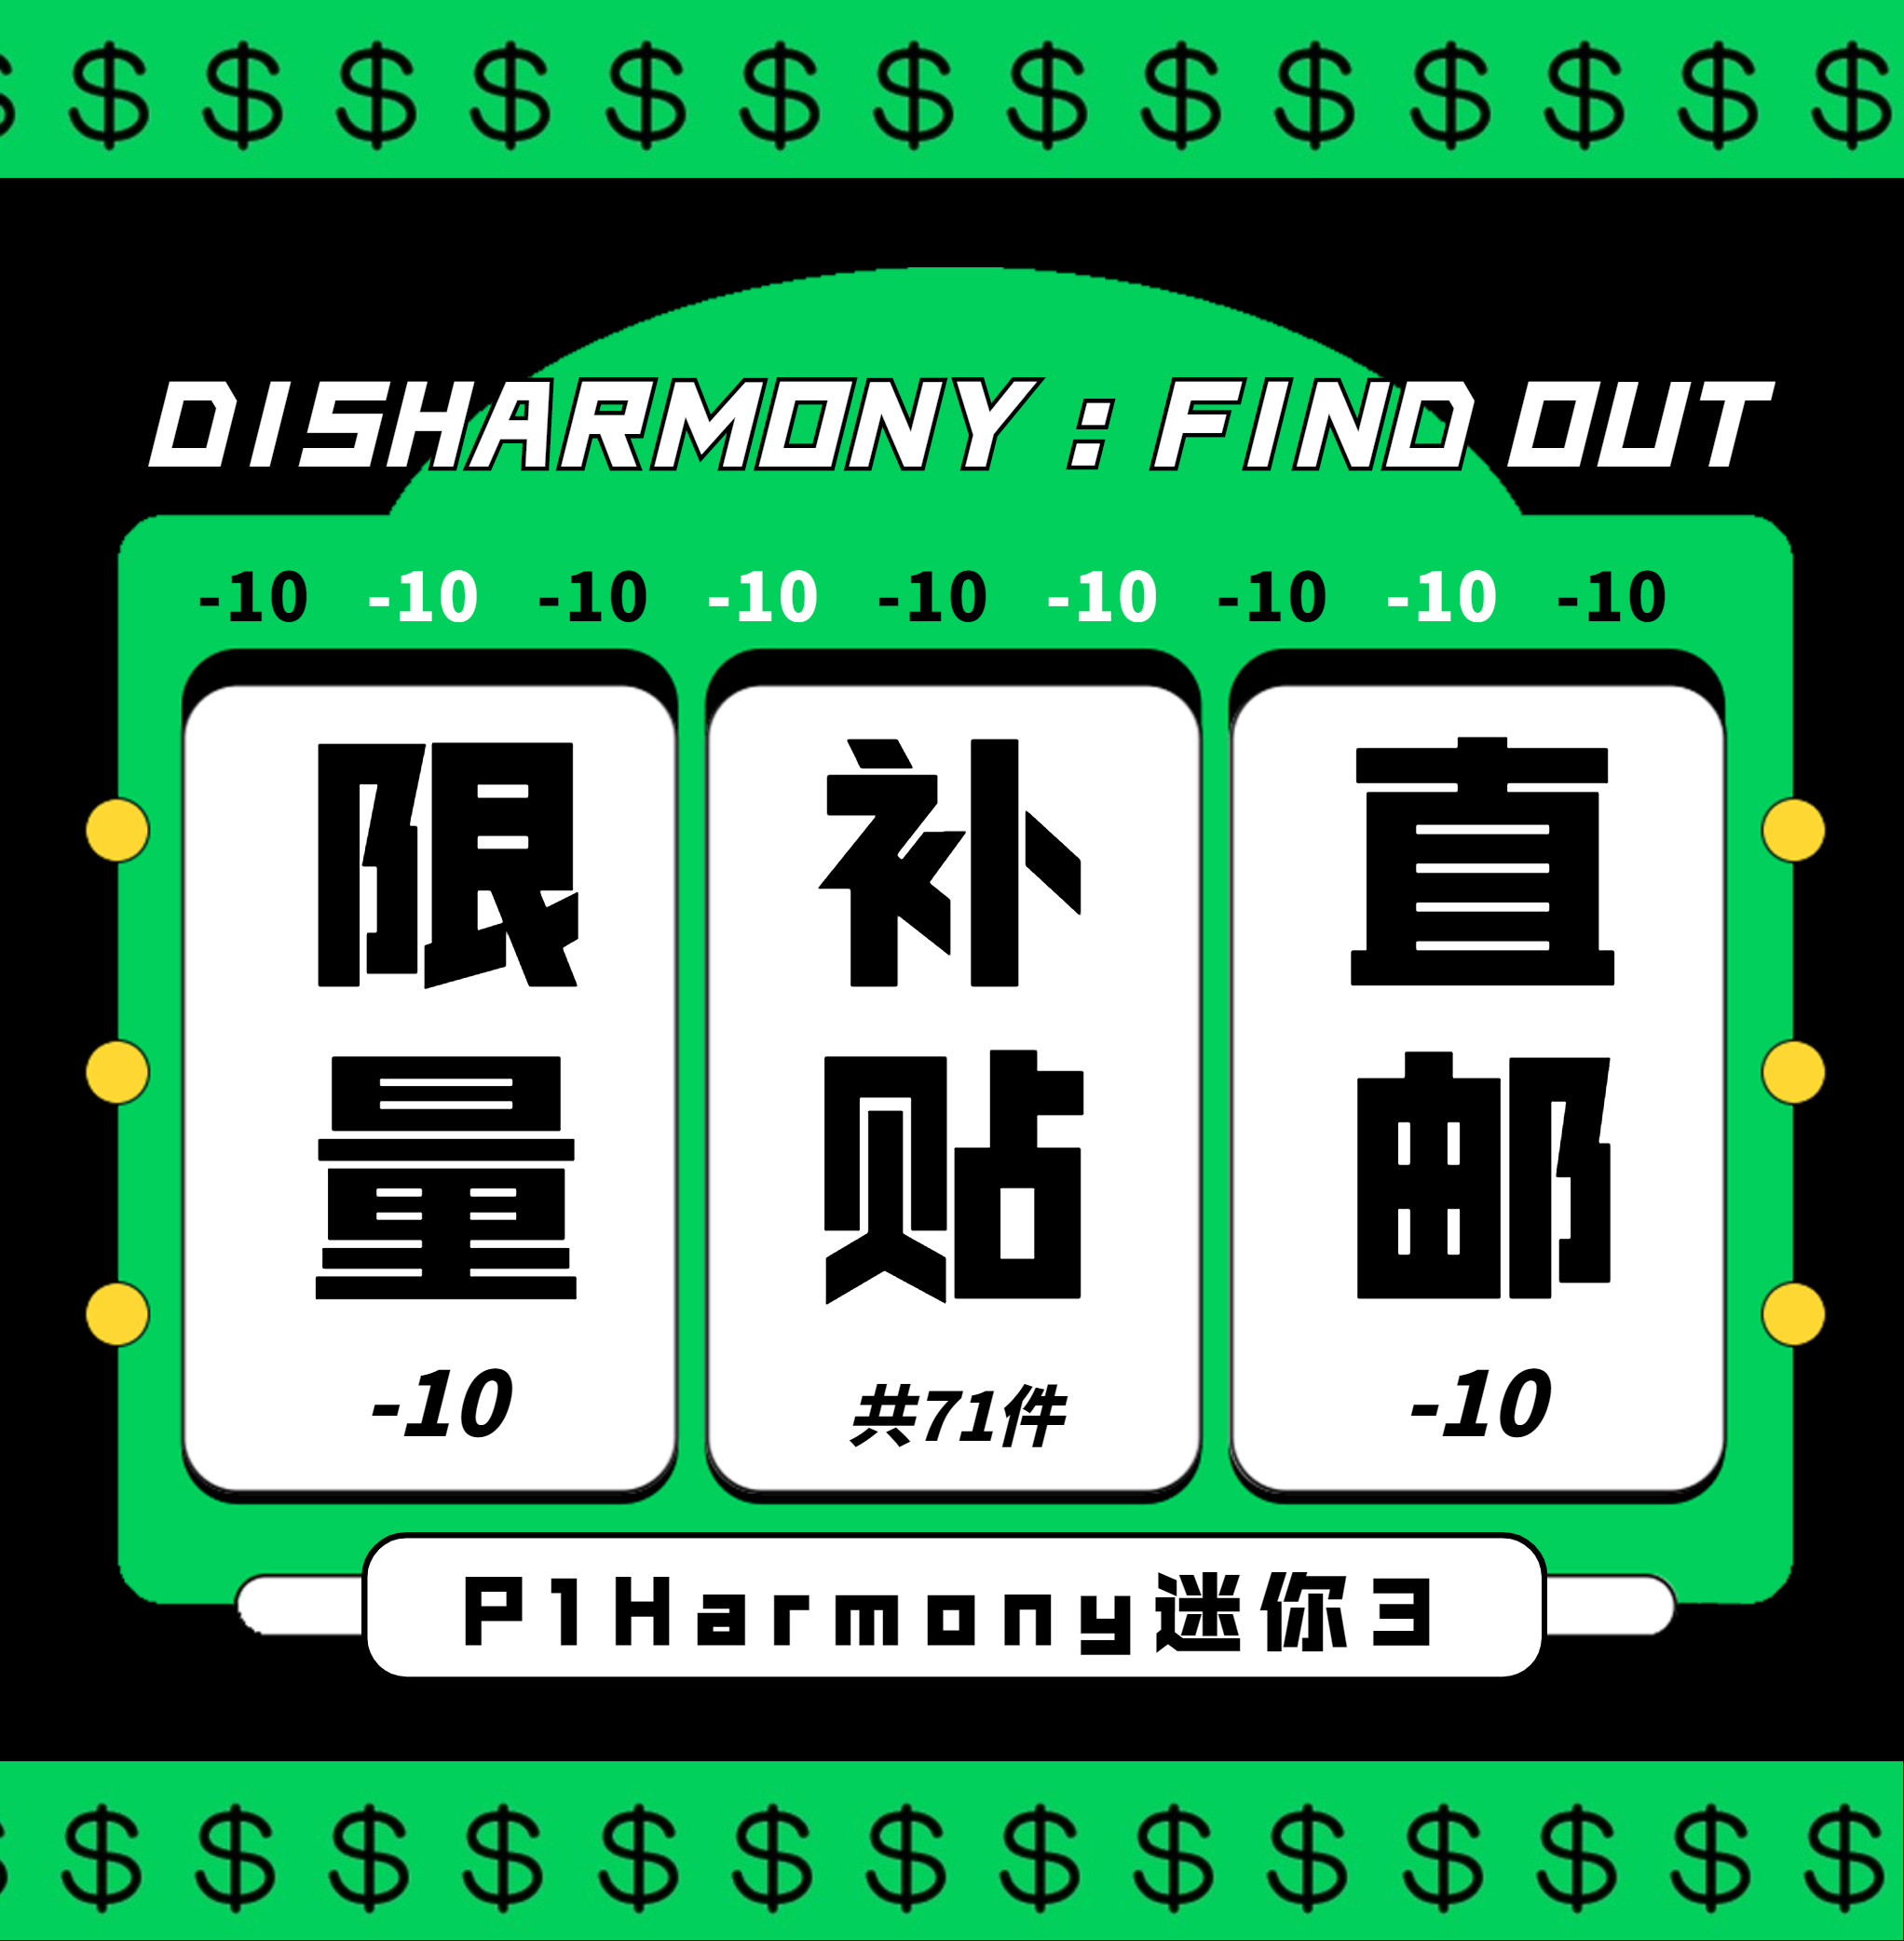 [全款 限量71张 补贴专] P1Harmony - 3rd 迷你专辑 [DISHARMONY : FIND OUT]_崔太洋吧_THEOBAR